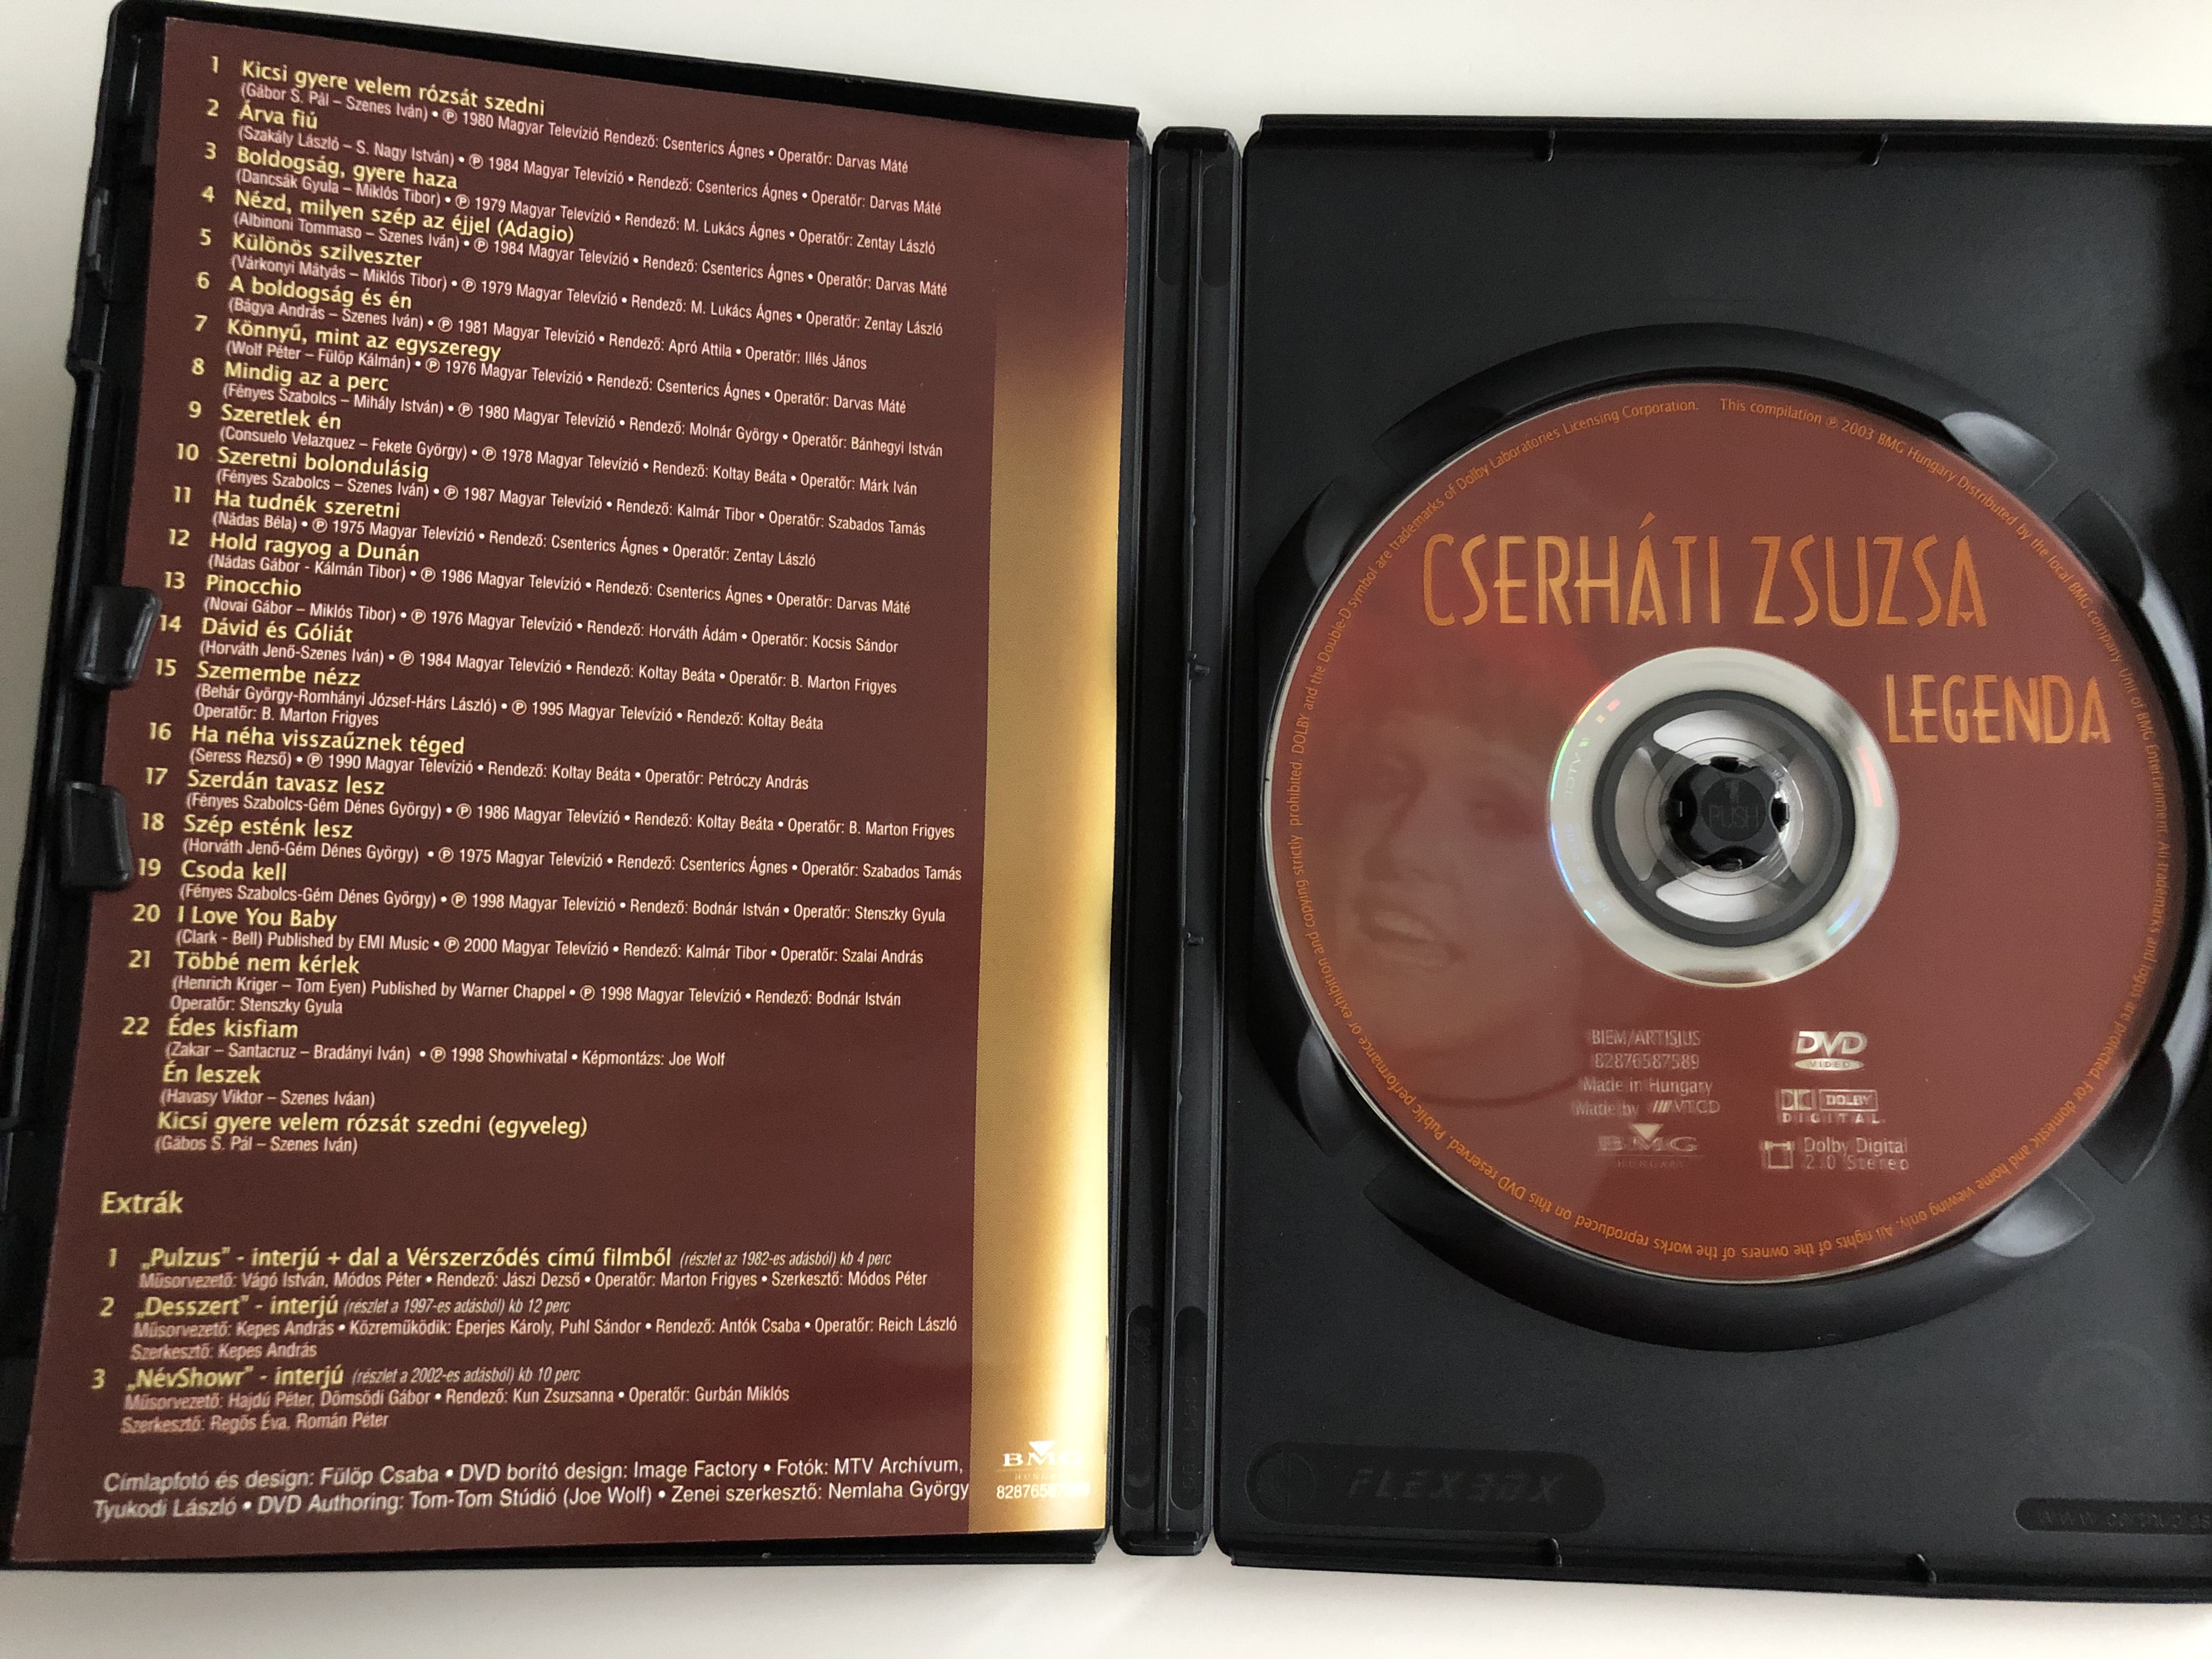 cserh-ti-zsuzsa-legenda-dvd-2003-dalok-s-extr-k-az-mtv-archivum-b-l-3-.jpg